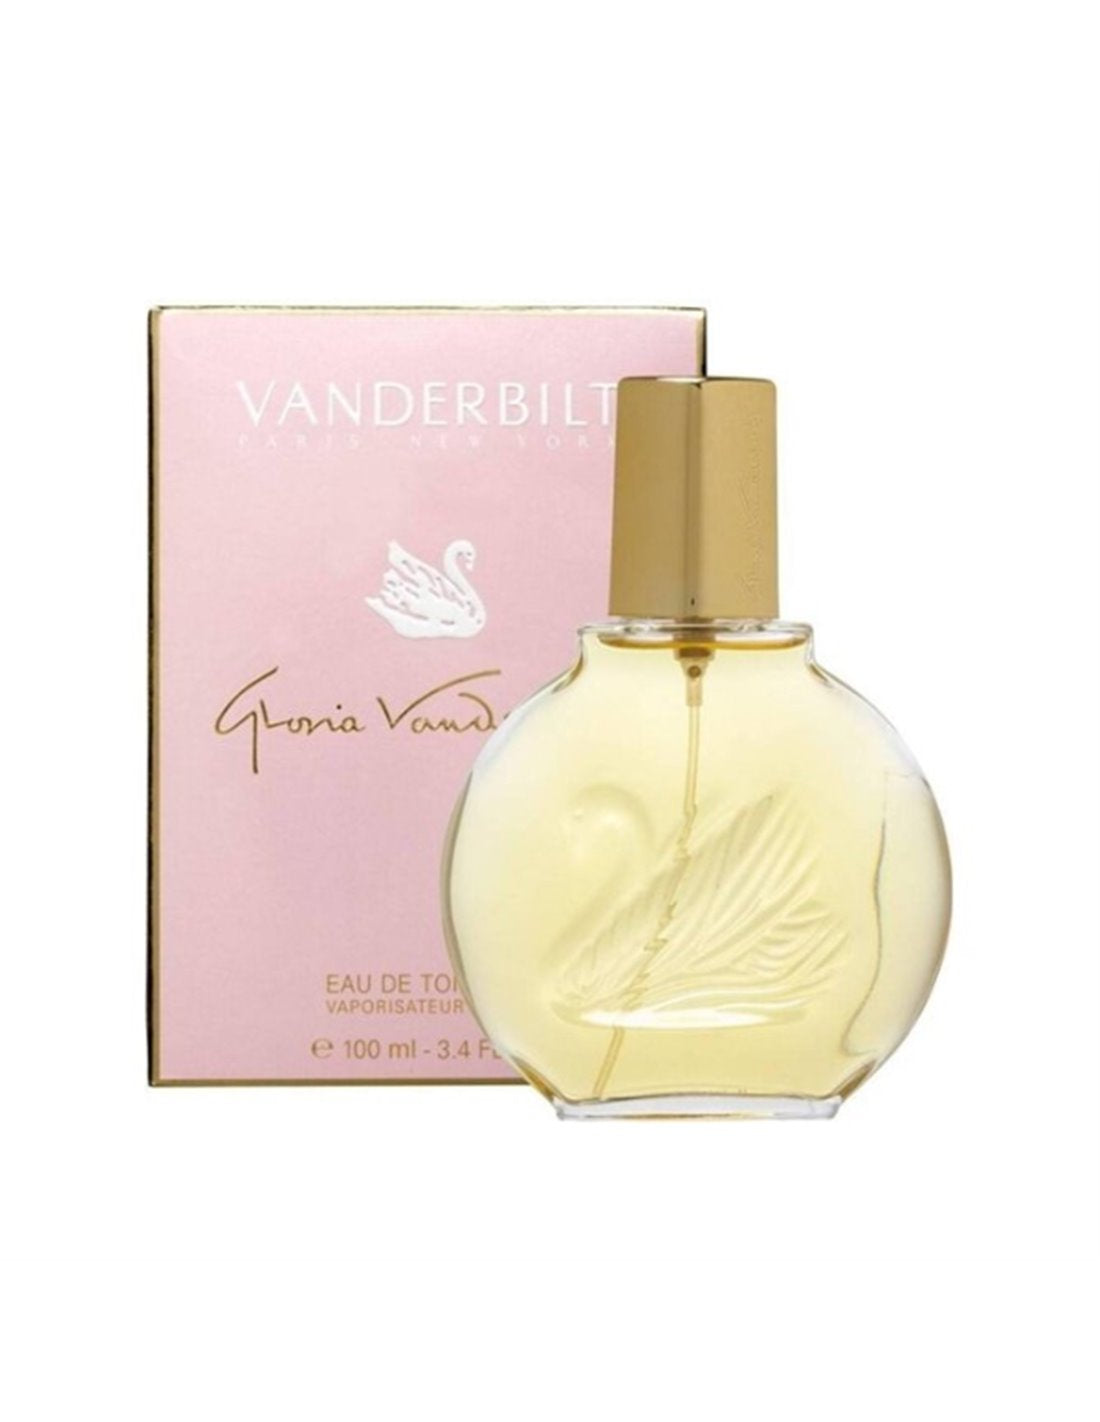 Parfums Vanderbilt de la marque Gloria Vanderbilt pour femme 100 ml